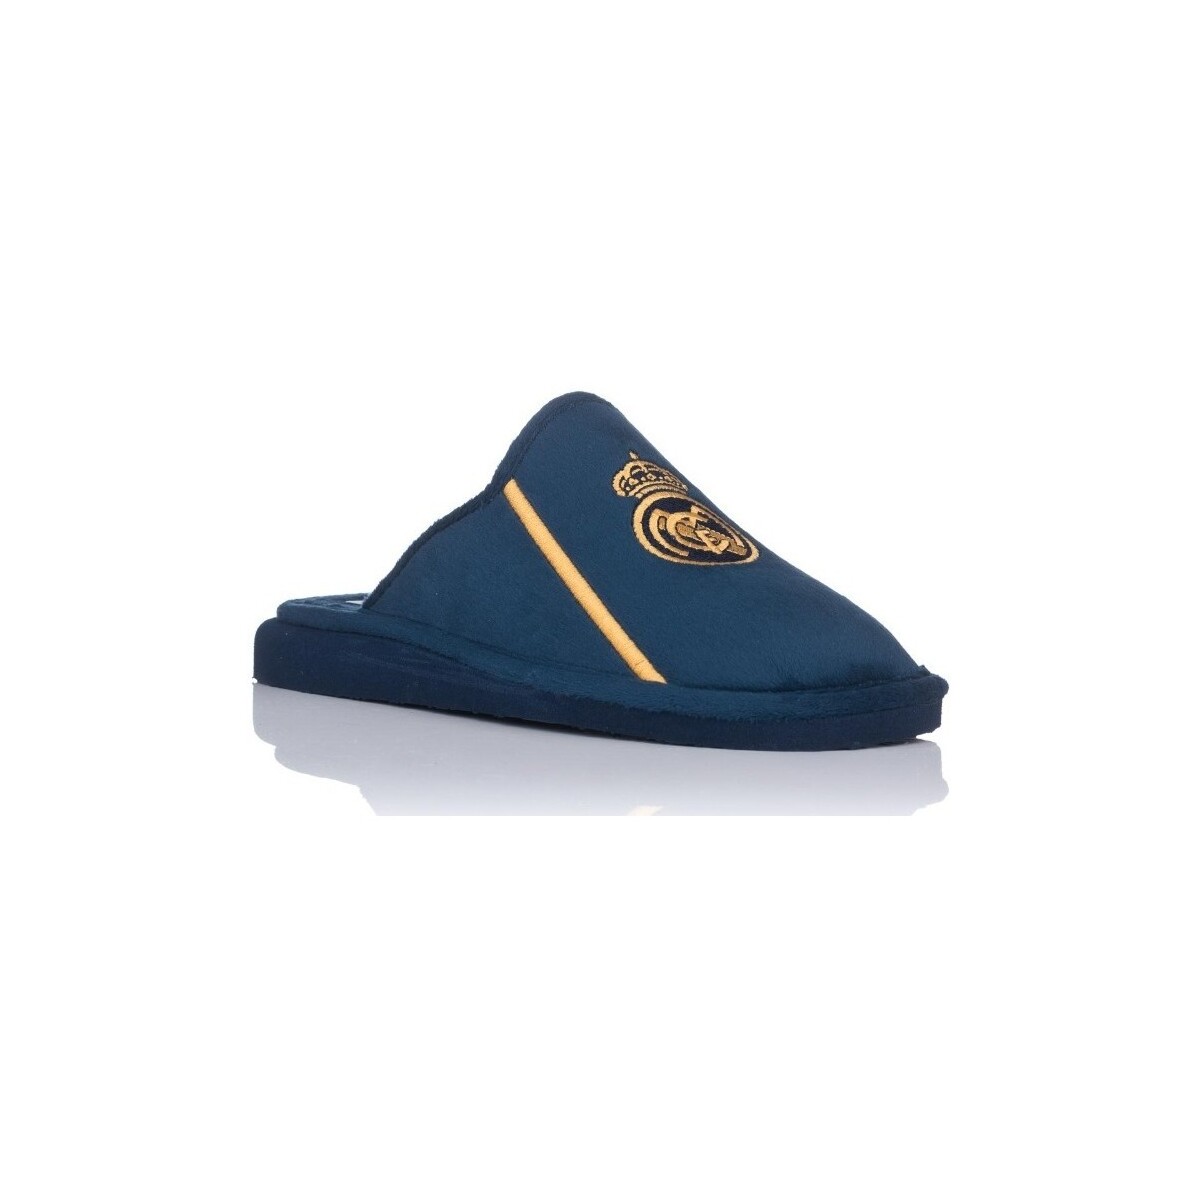 Schuhe Herren Hausschuhe Andinas 918-90 Blau